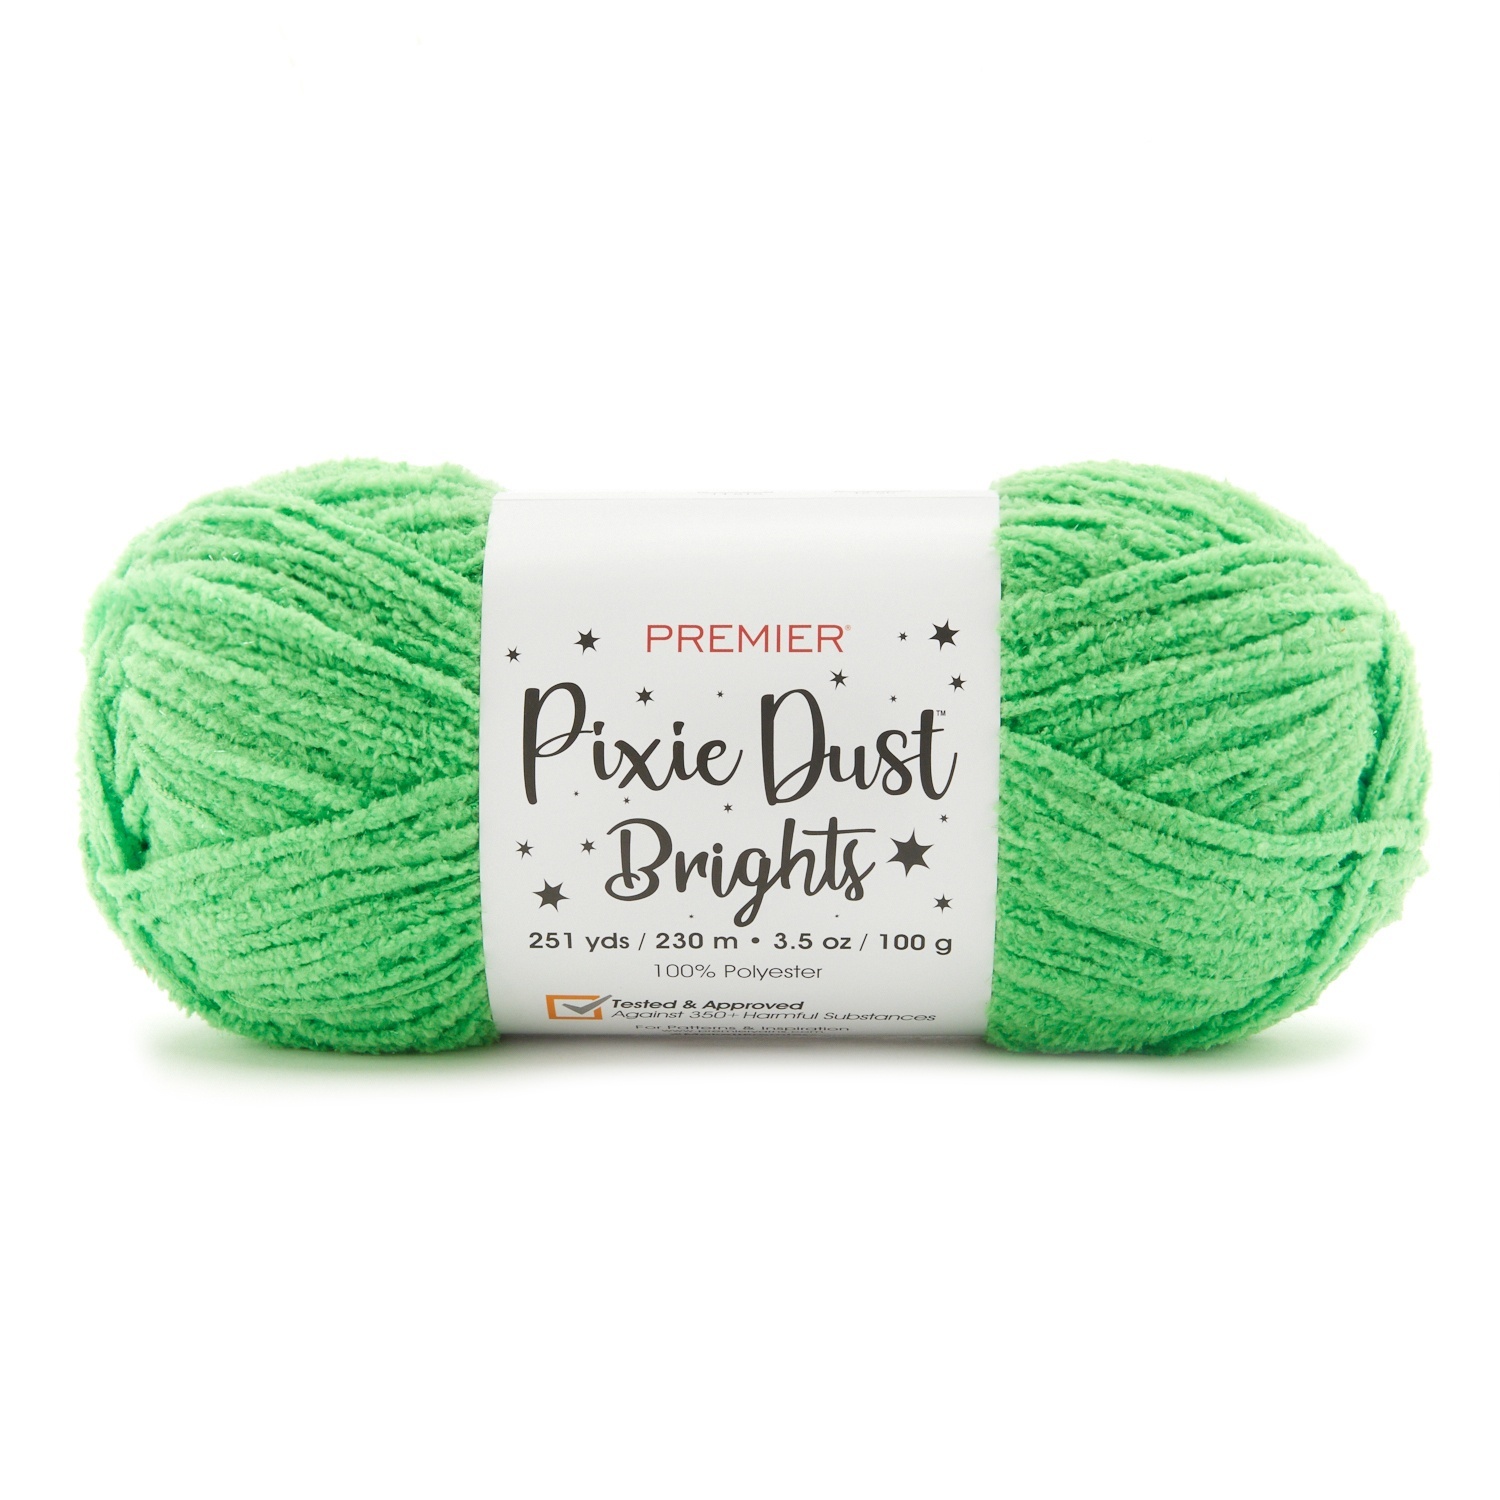 Premier Pixie Dust Brights Yarn-Lucky Clover - $16.25